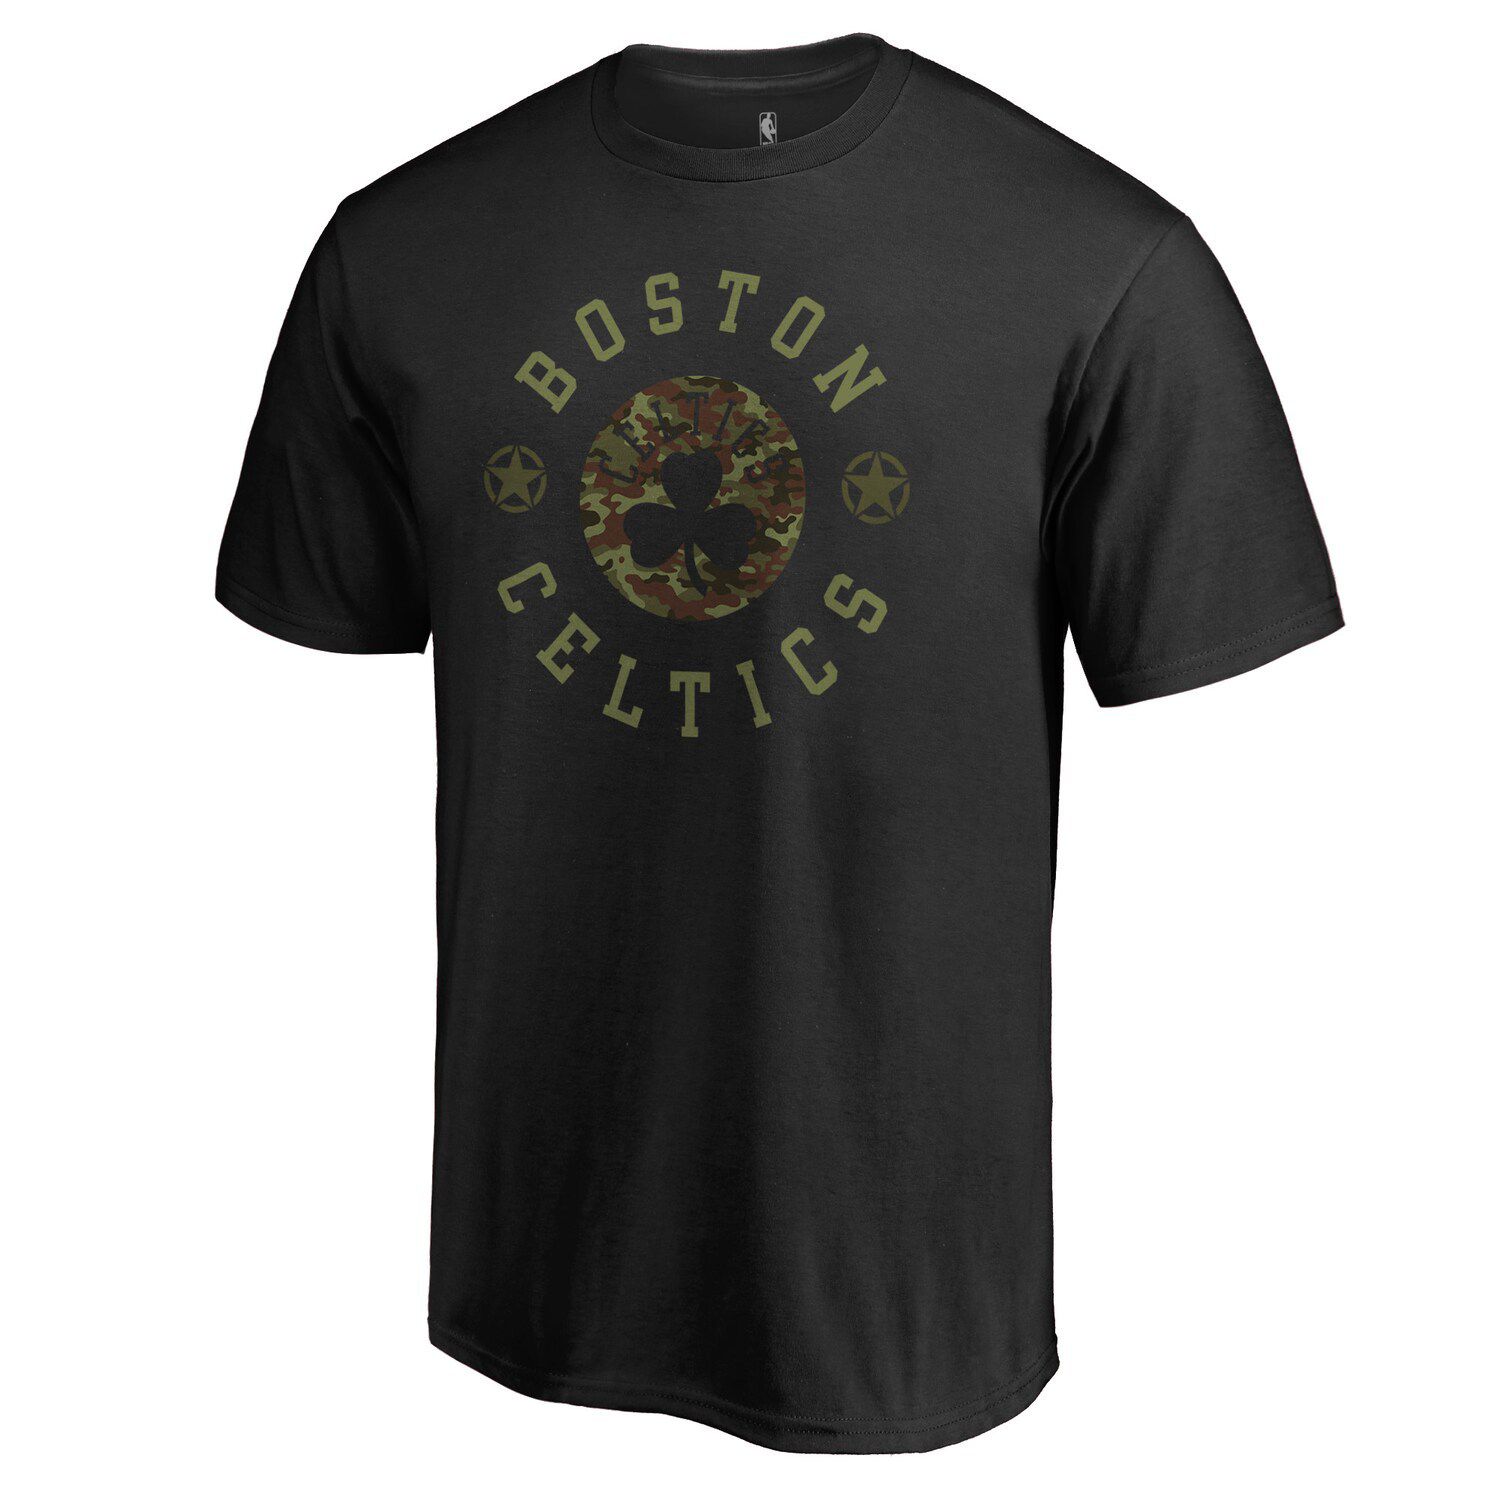 Men's Fanatics Branded Jayson Tatum Black Boston Celtics Team Playmaker  Name & Number T-Shirt